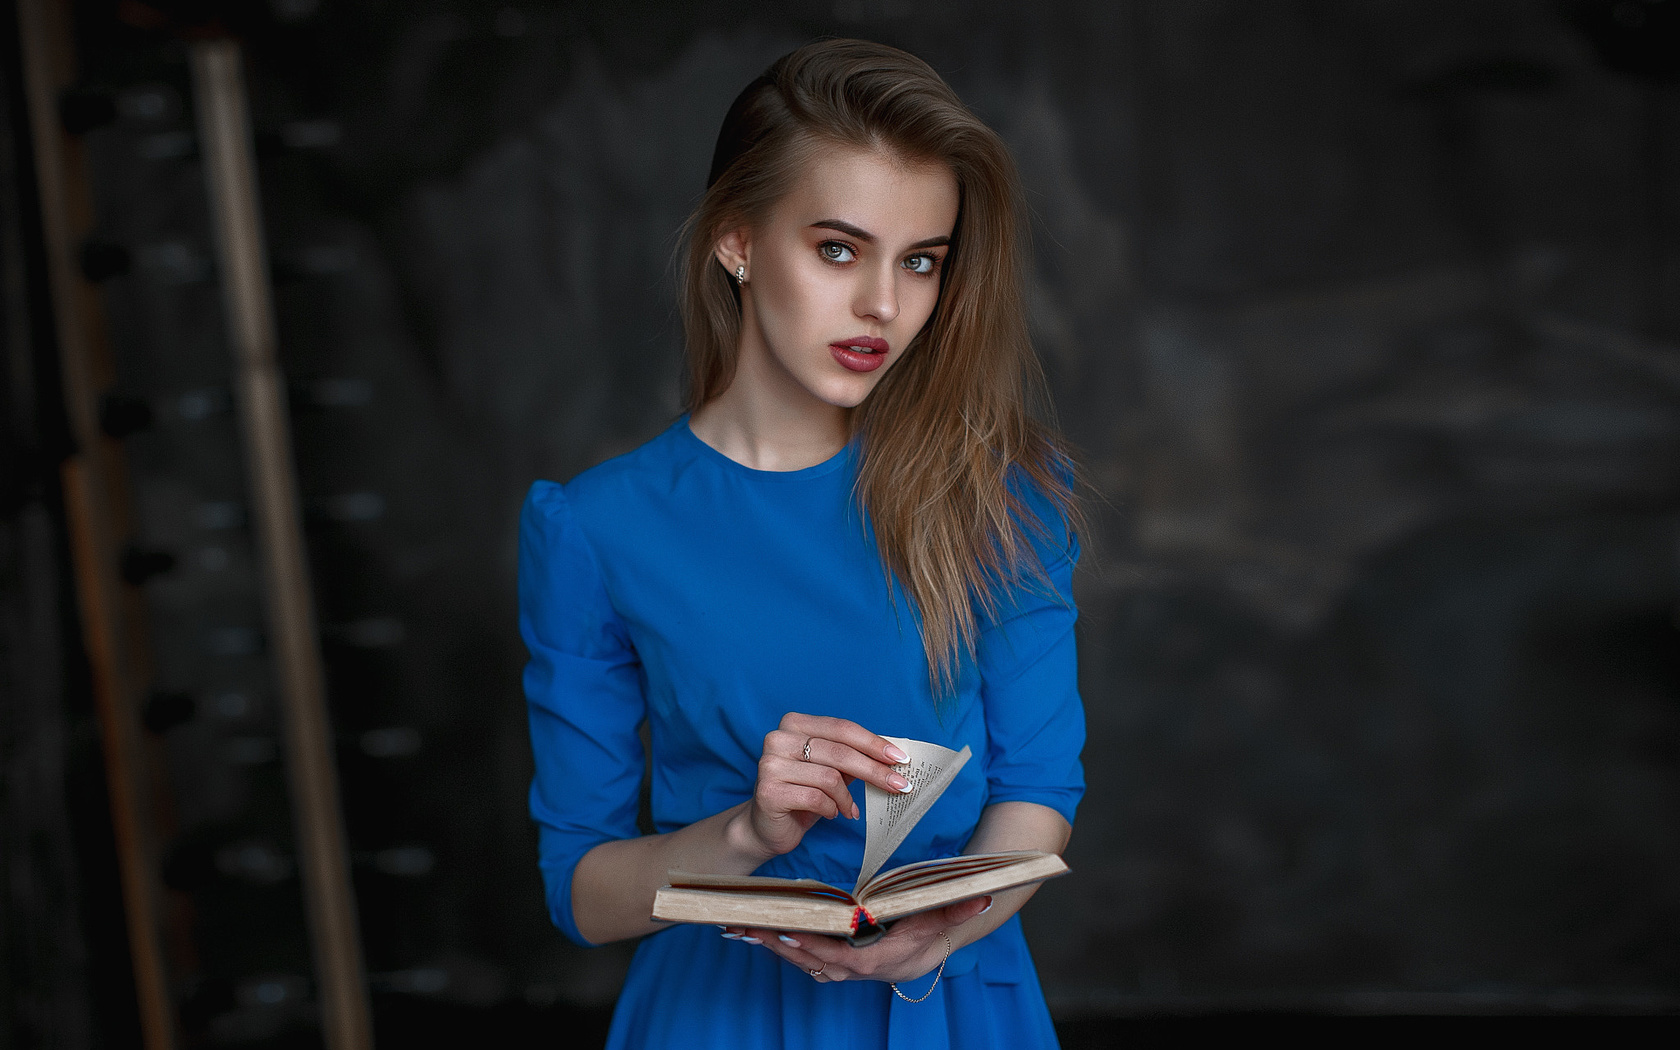 women, blonde, portrait, blue dress, books, red lipstick